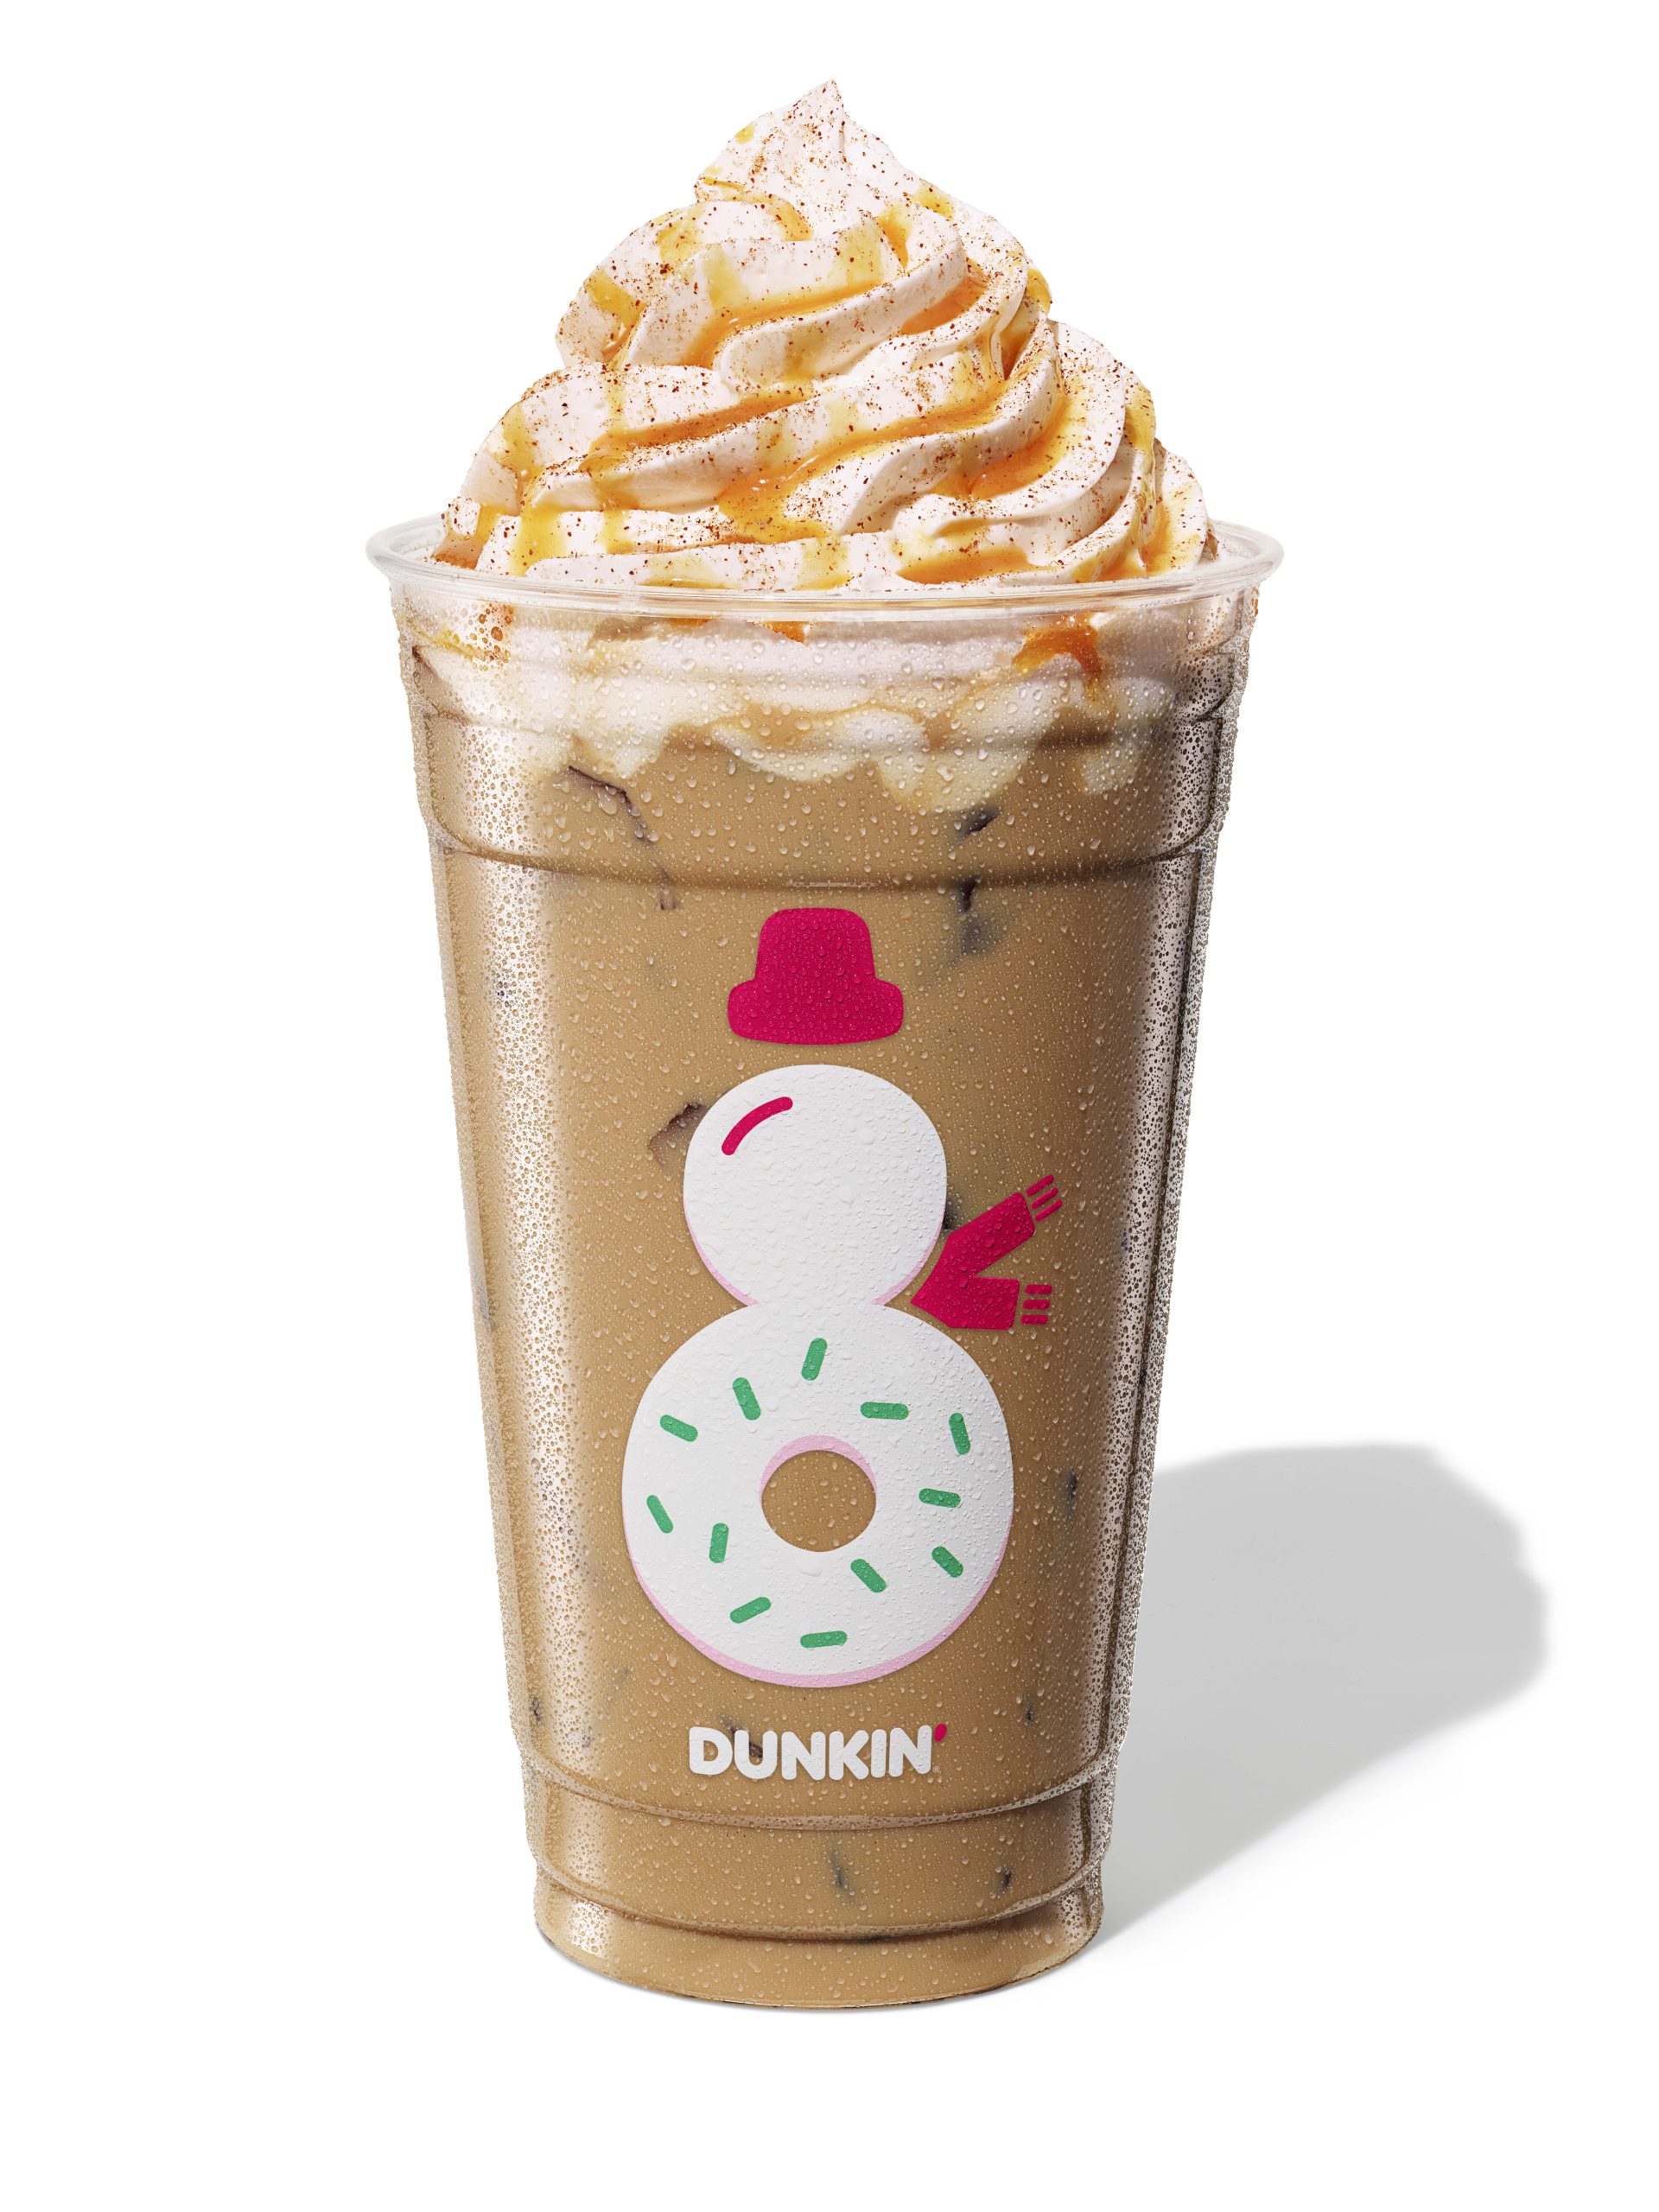 Dunkin free coffee mondays and holiday menu plus freebies